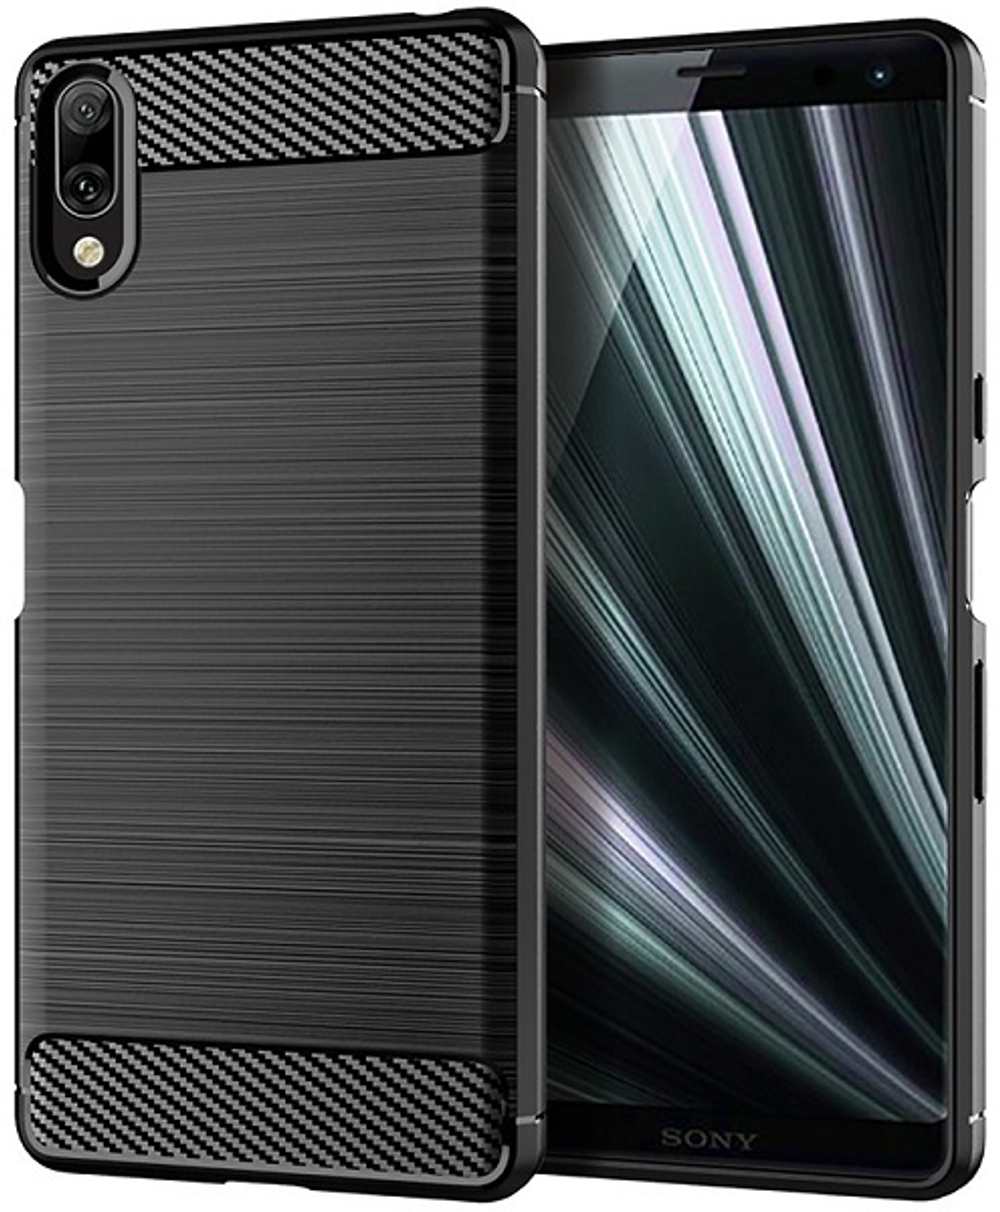 Чехол на Sony Xperia L3 цвет Black (черный), серия Carbon от Caseport